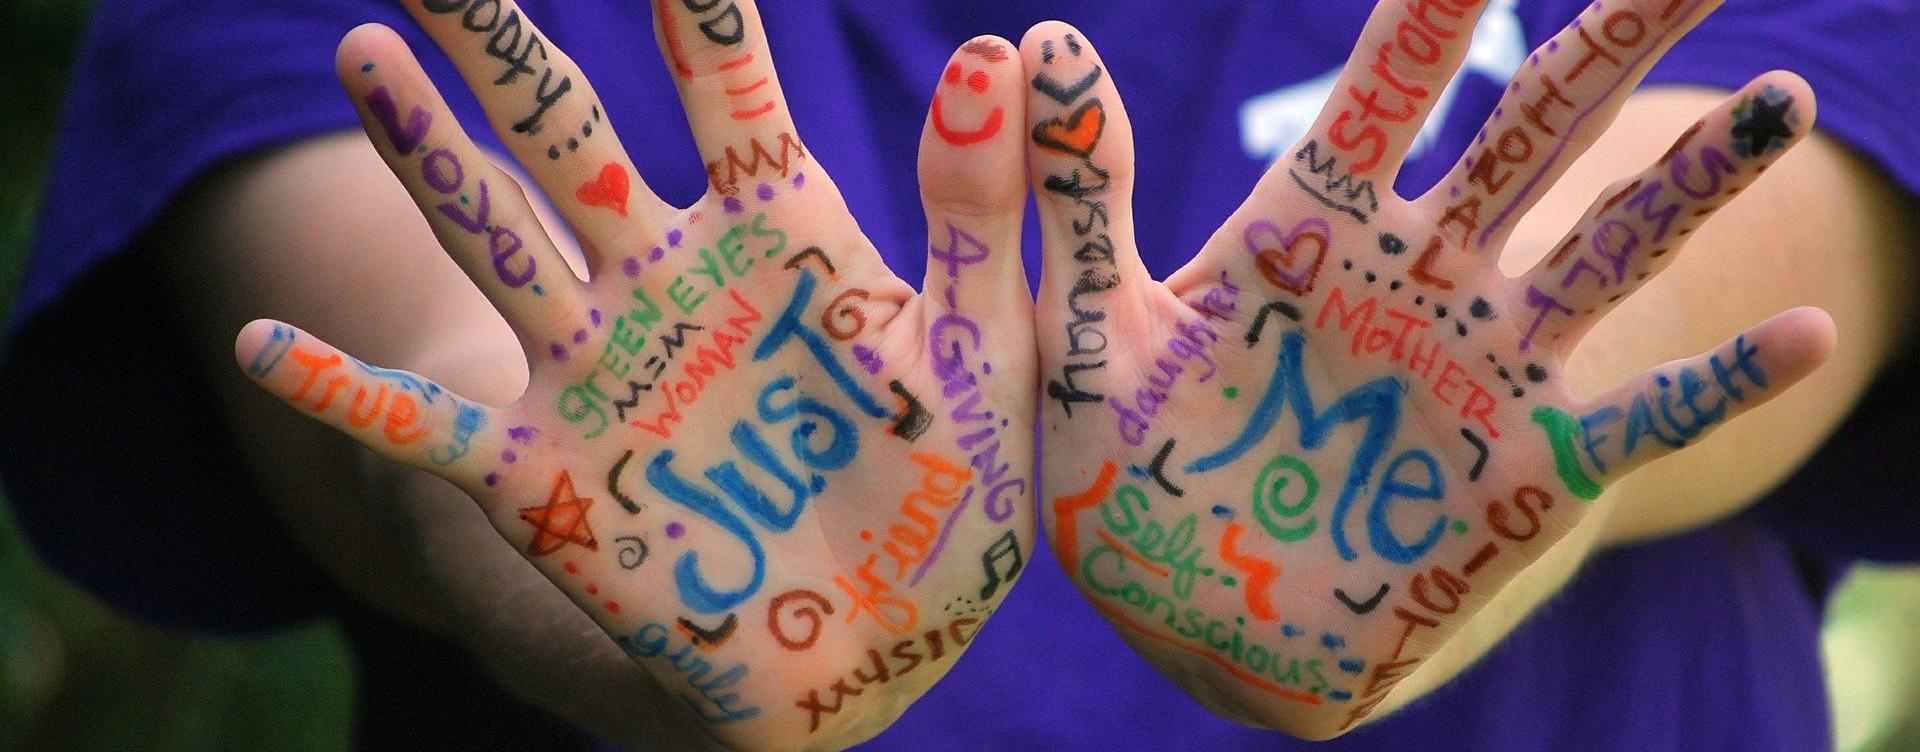 manos pintadas con mensajes